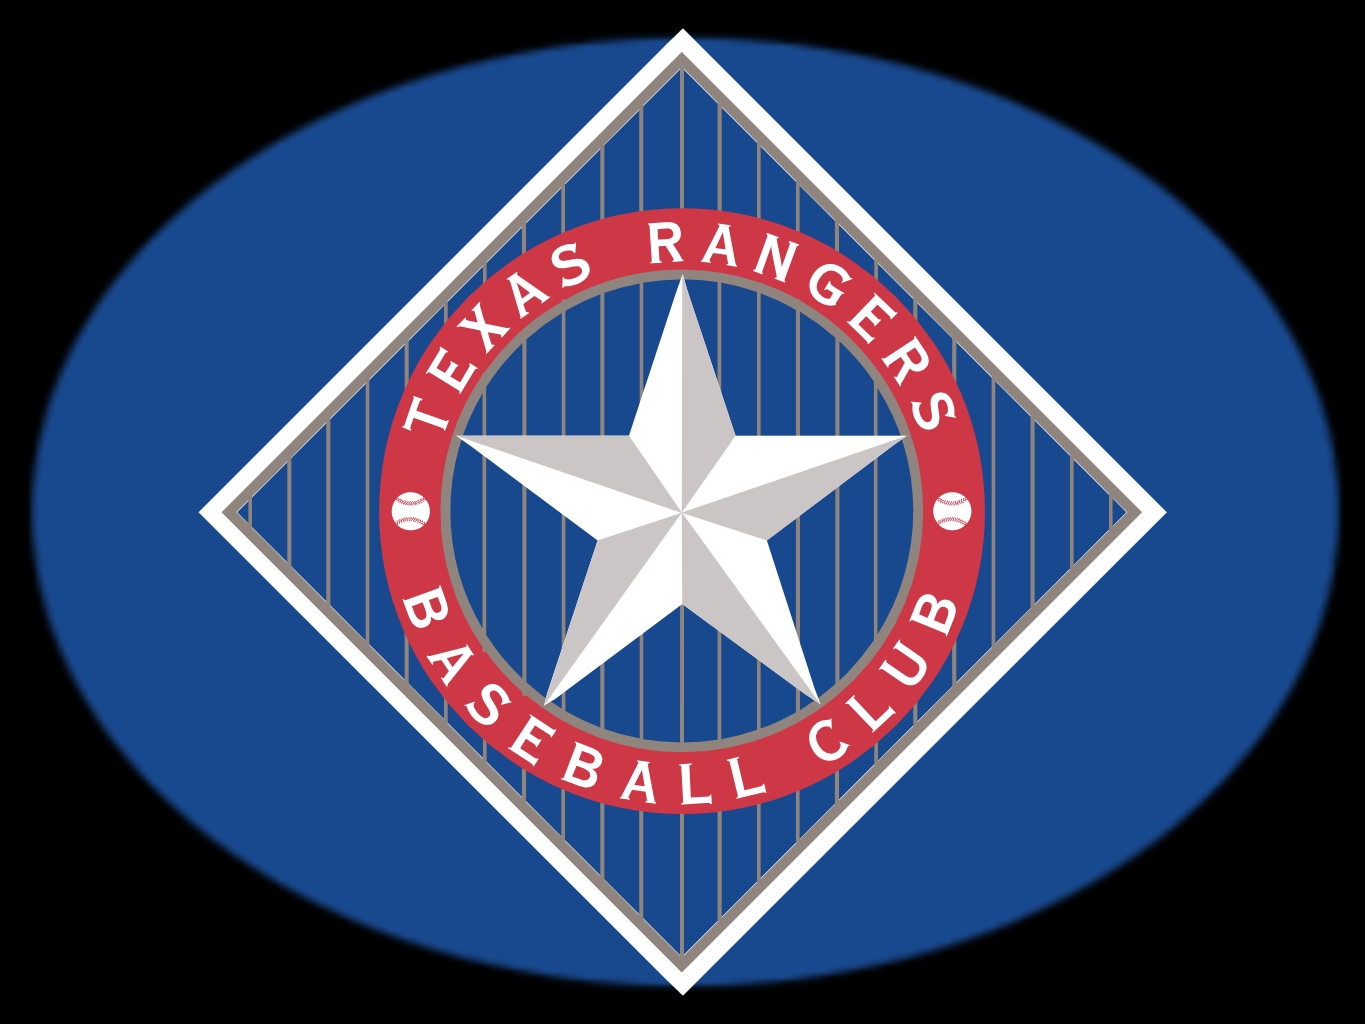 Texas Rangers wallpapers Texas Rangers background